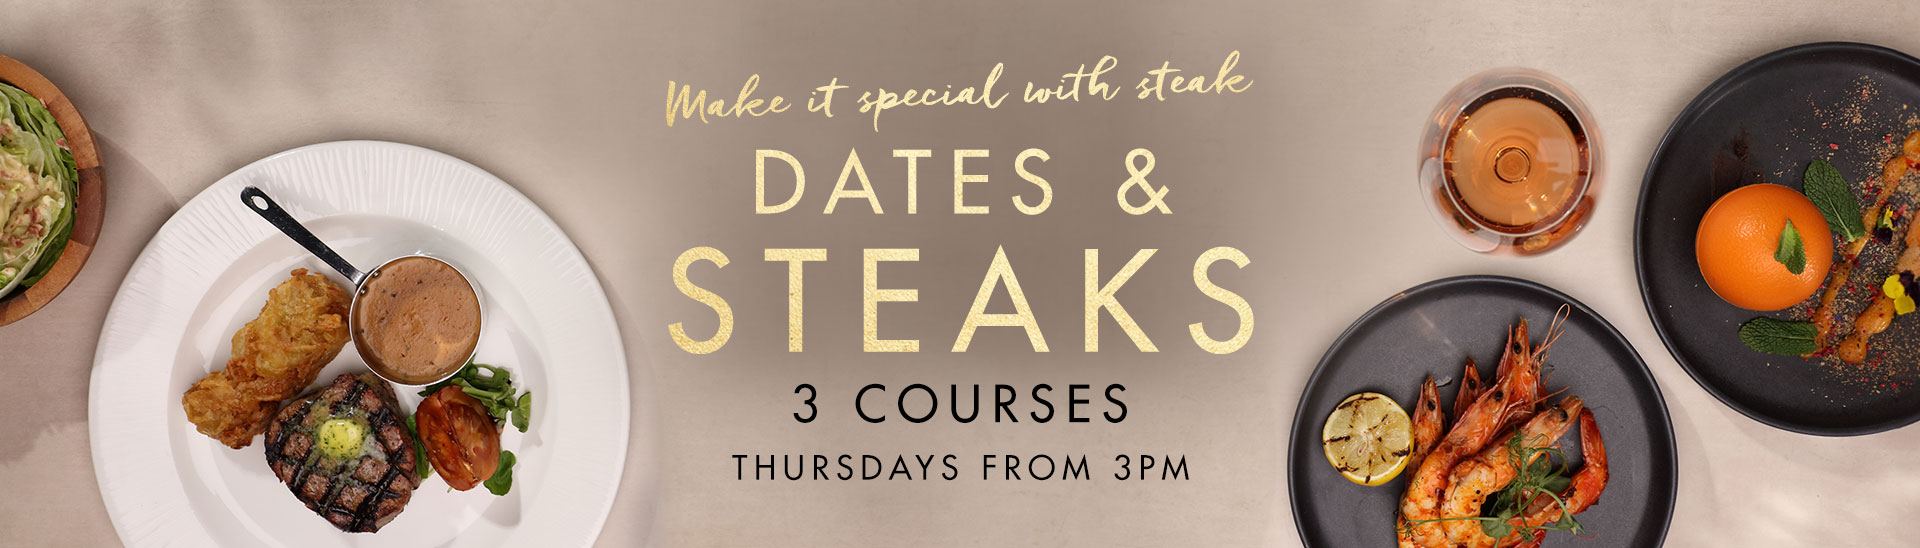 Dates & Steaks at Miller & Carter Bath